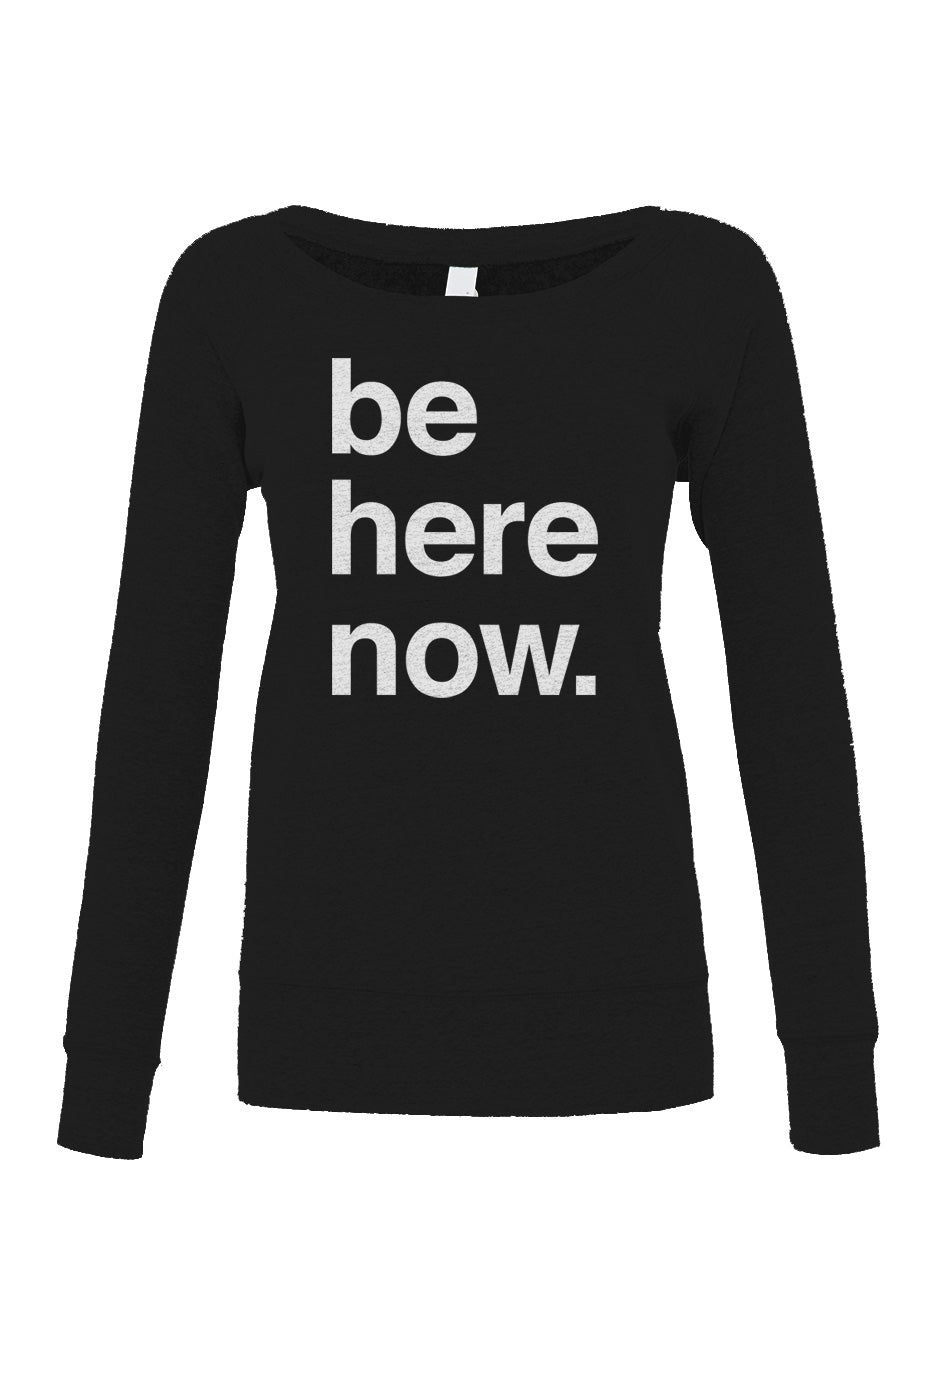 Women's Be Here Now Scoop Neck Fleece - New Age Mindfulness Meditation Shirt